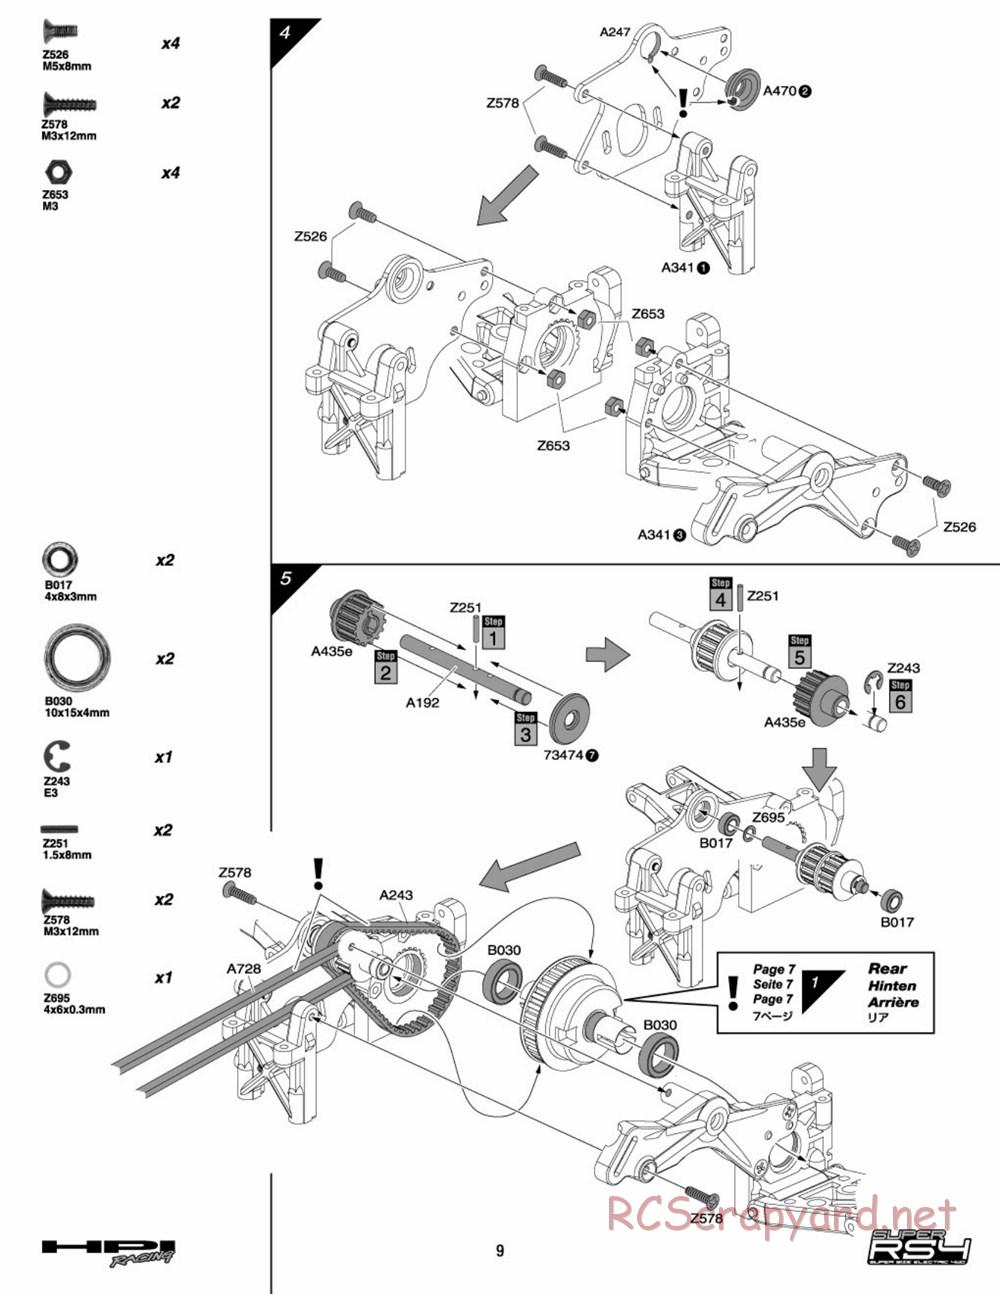 HPI - Super RS4 - Manual - Page 8